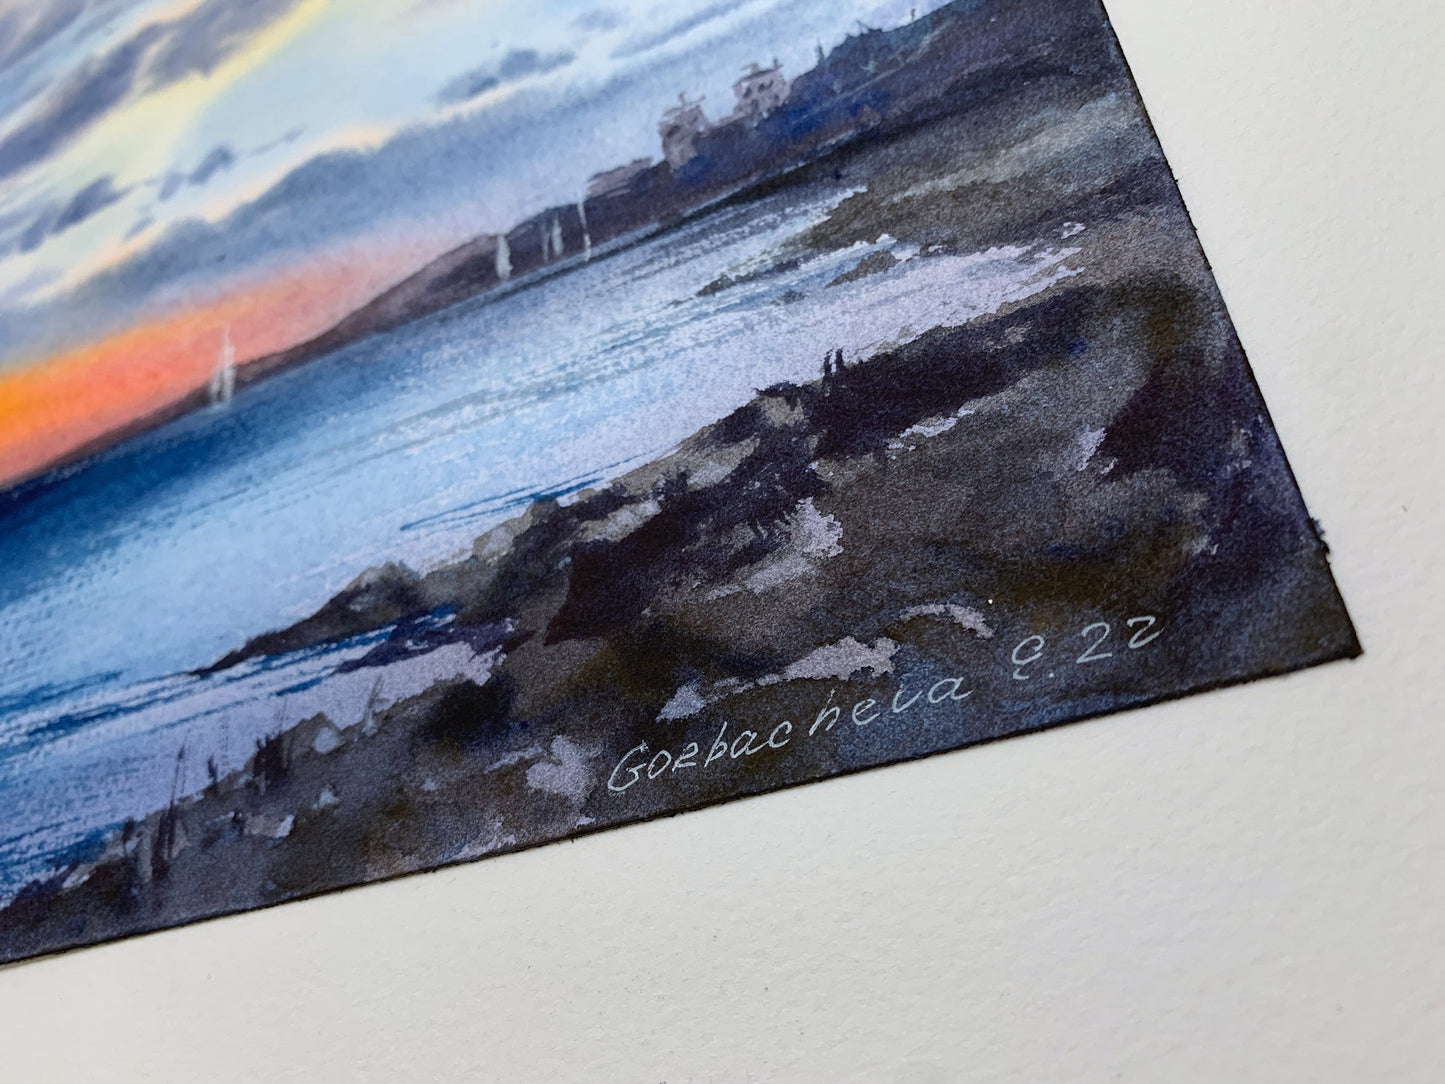 Seaview Small Painting, Beach Original Watercolour Art, Seascape Wall Art, Orange Sunset, Yachts, Sailboats, Gift For Sailor